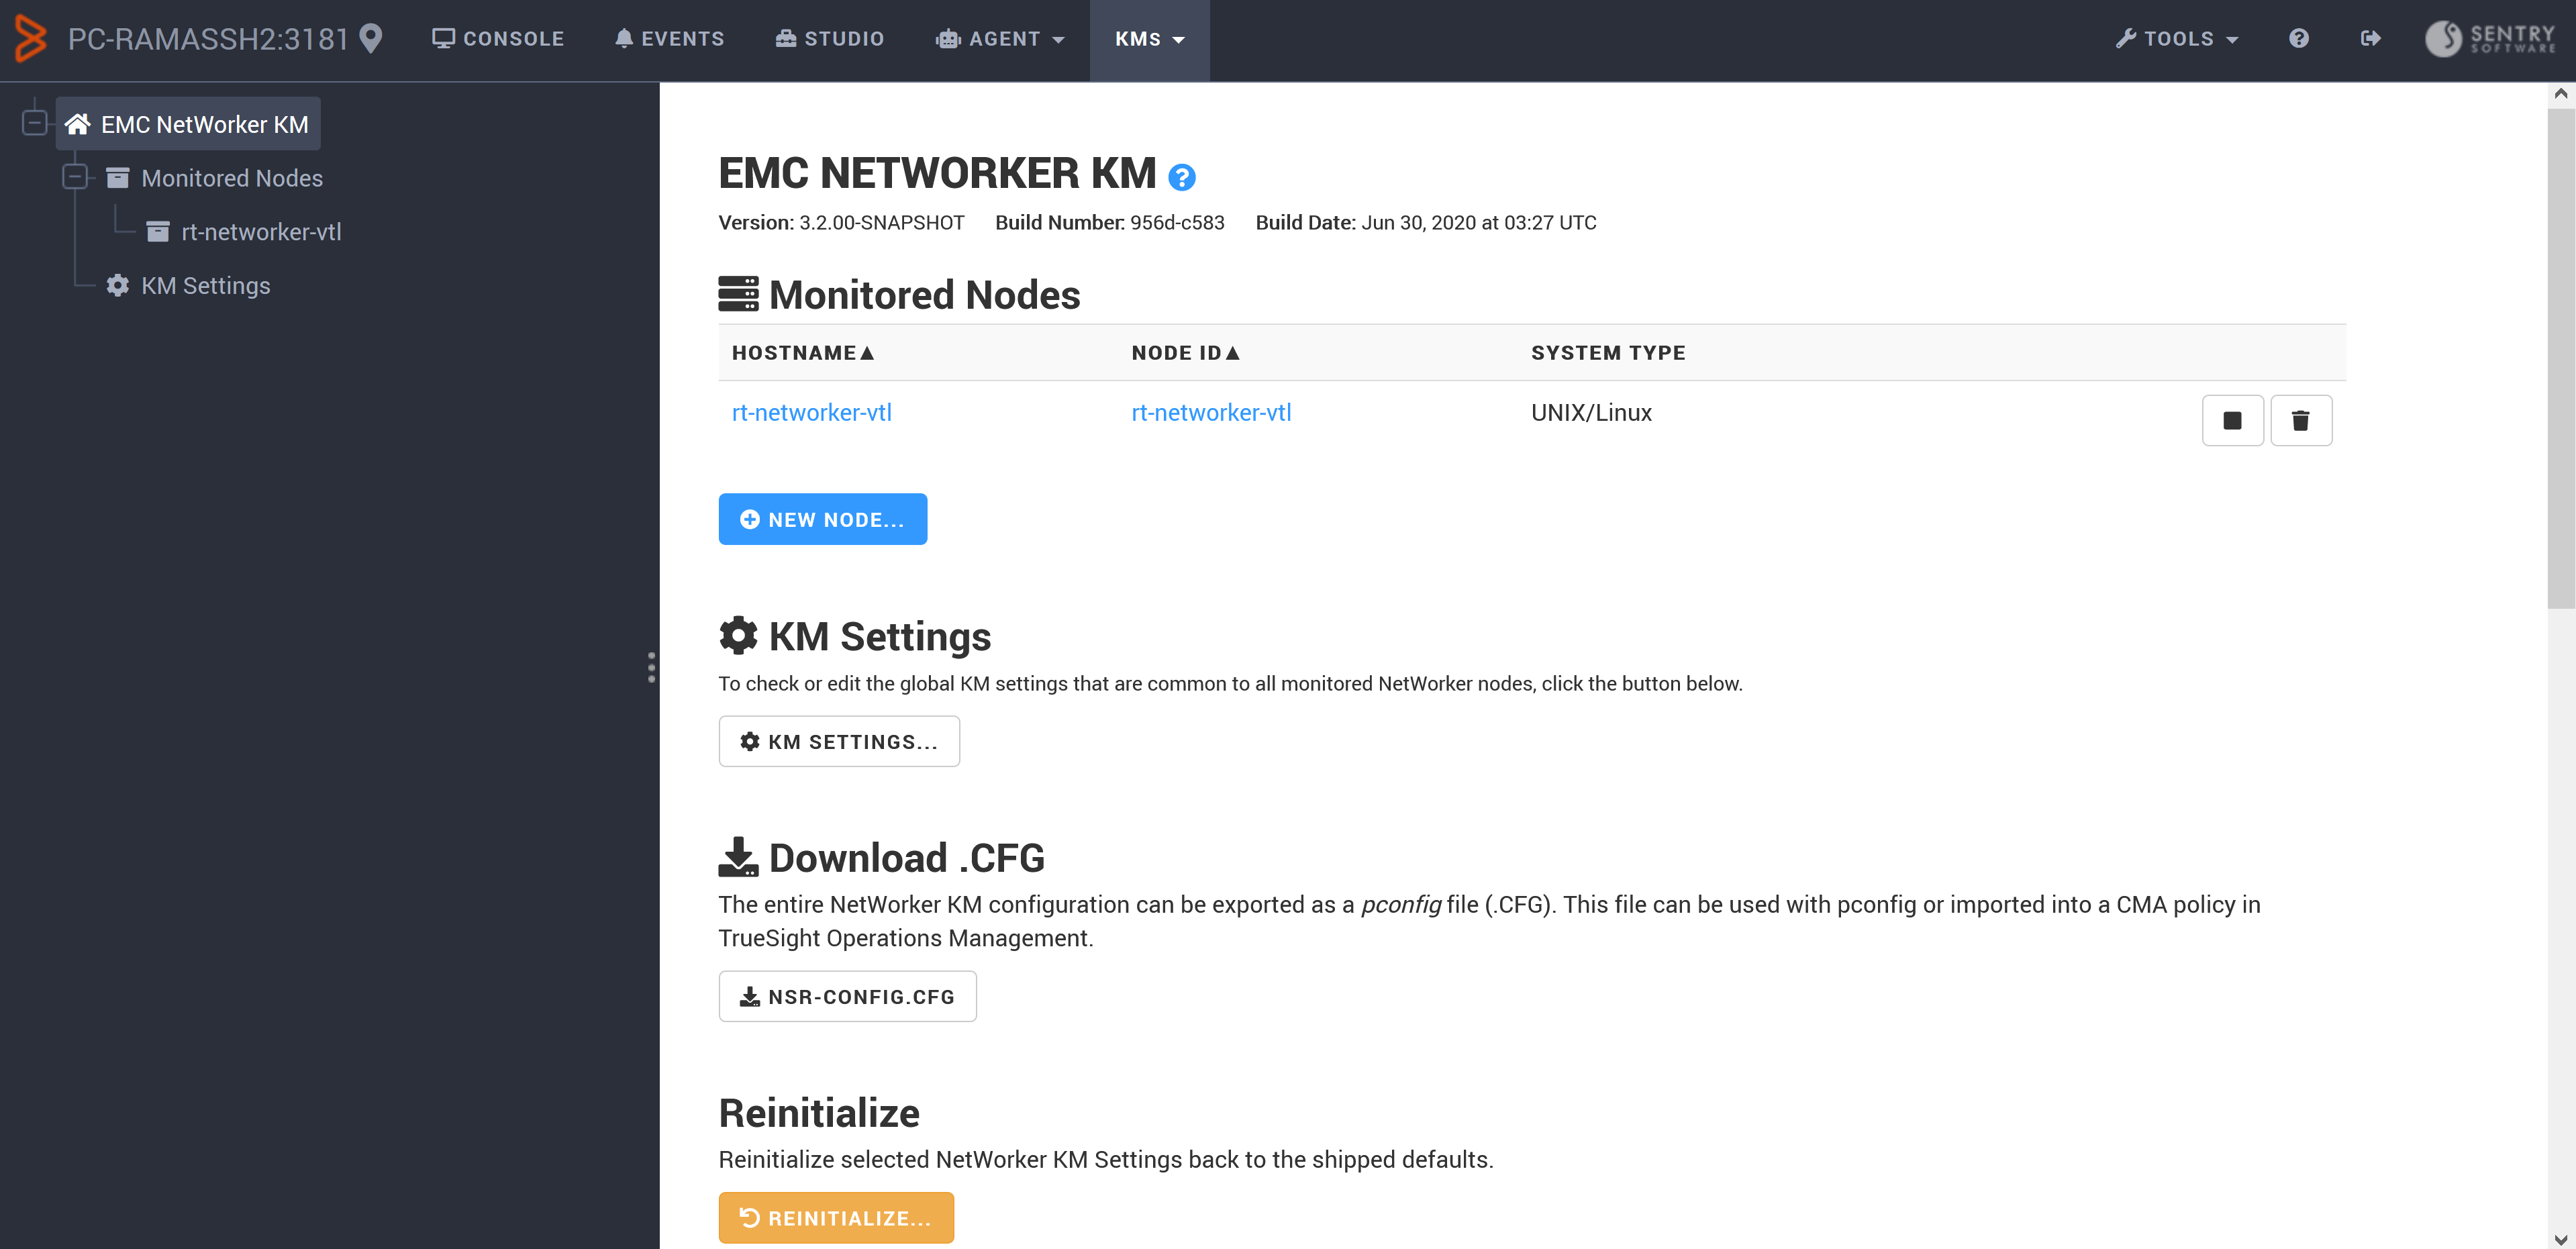 EMC NetWorker KM Main Page